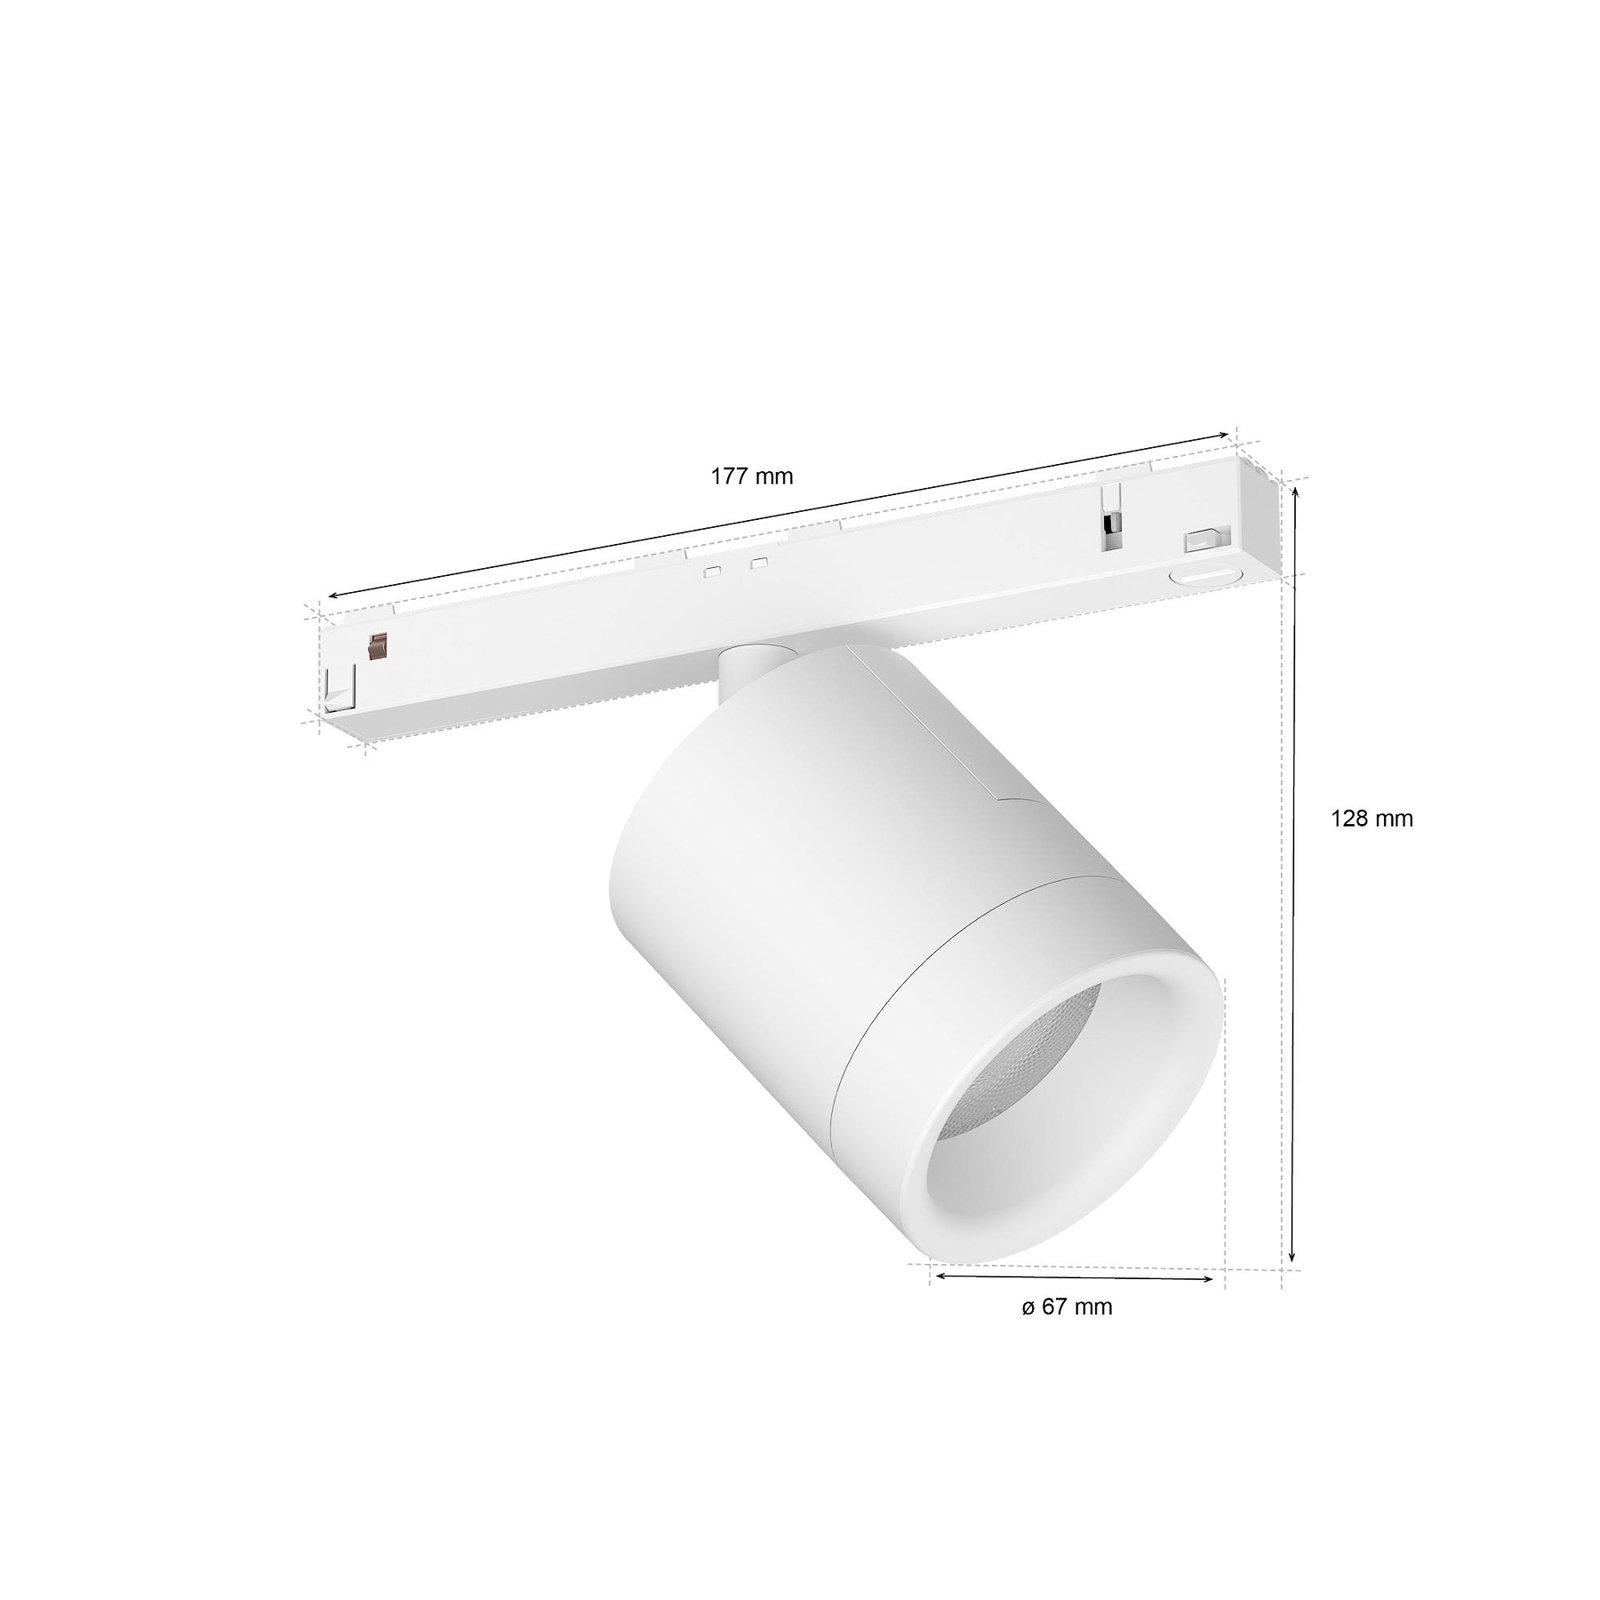 Philips Hue Perifo LED spot extension, white